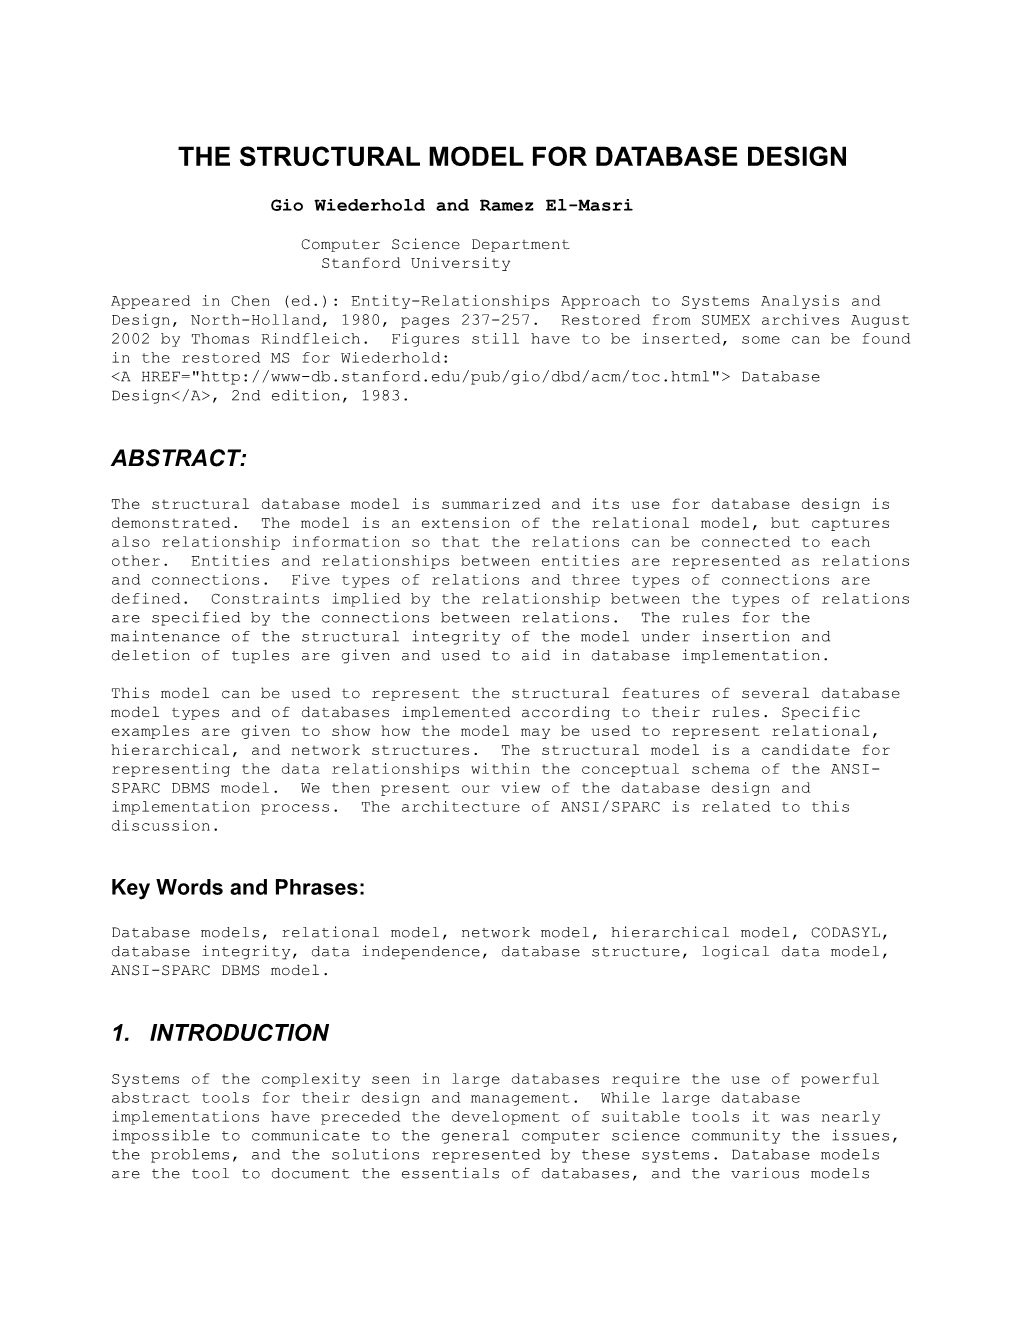 The Structural Model for Database Design